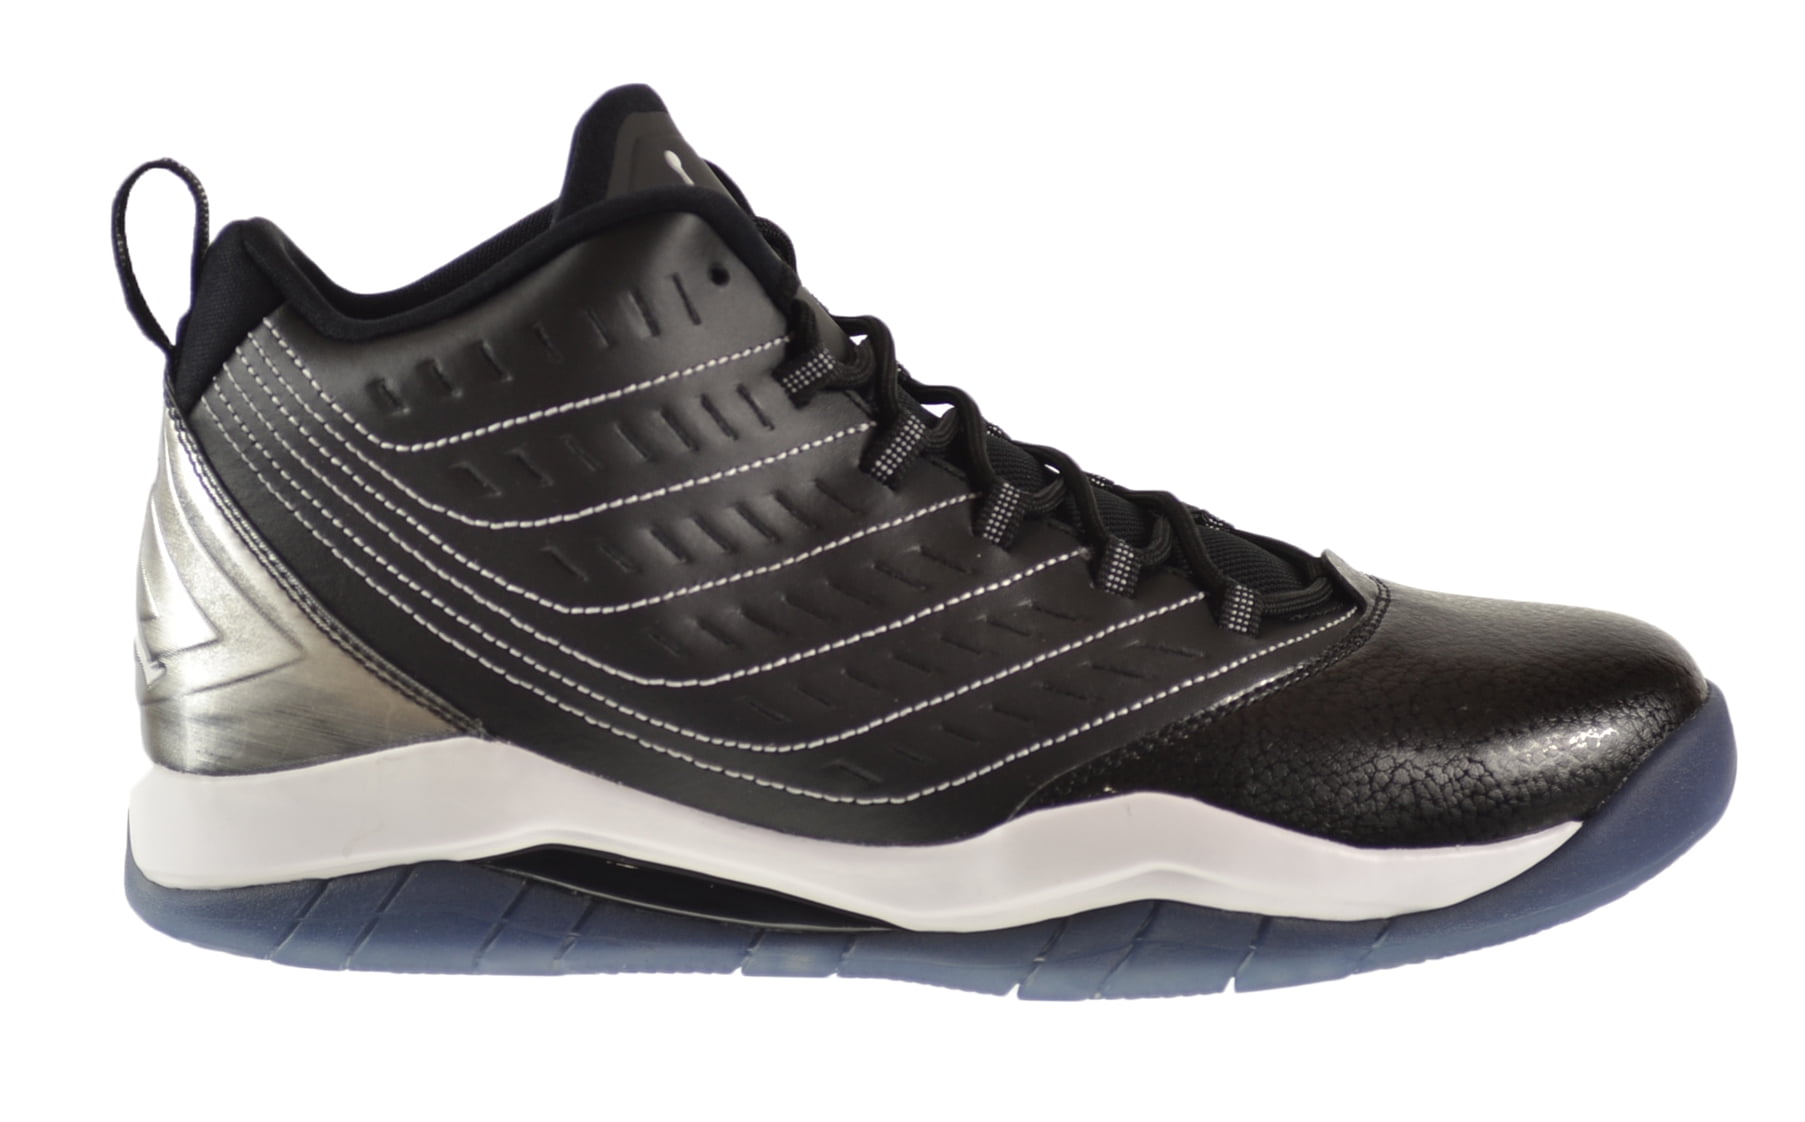 Jordan Velocity Men's Shoes Black/White/White 688975-010 - Walmart.com